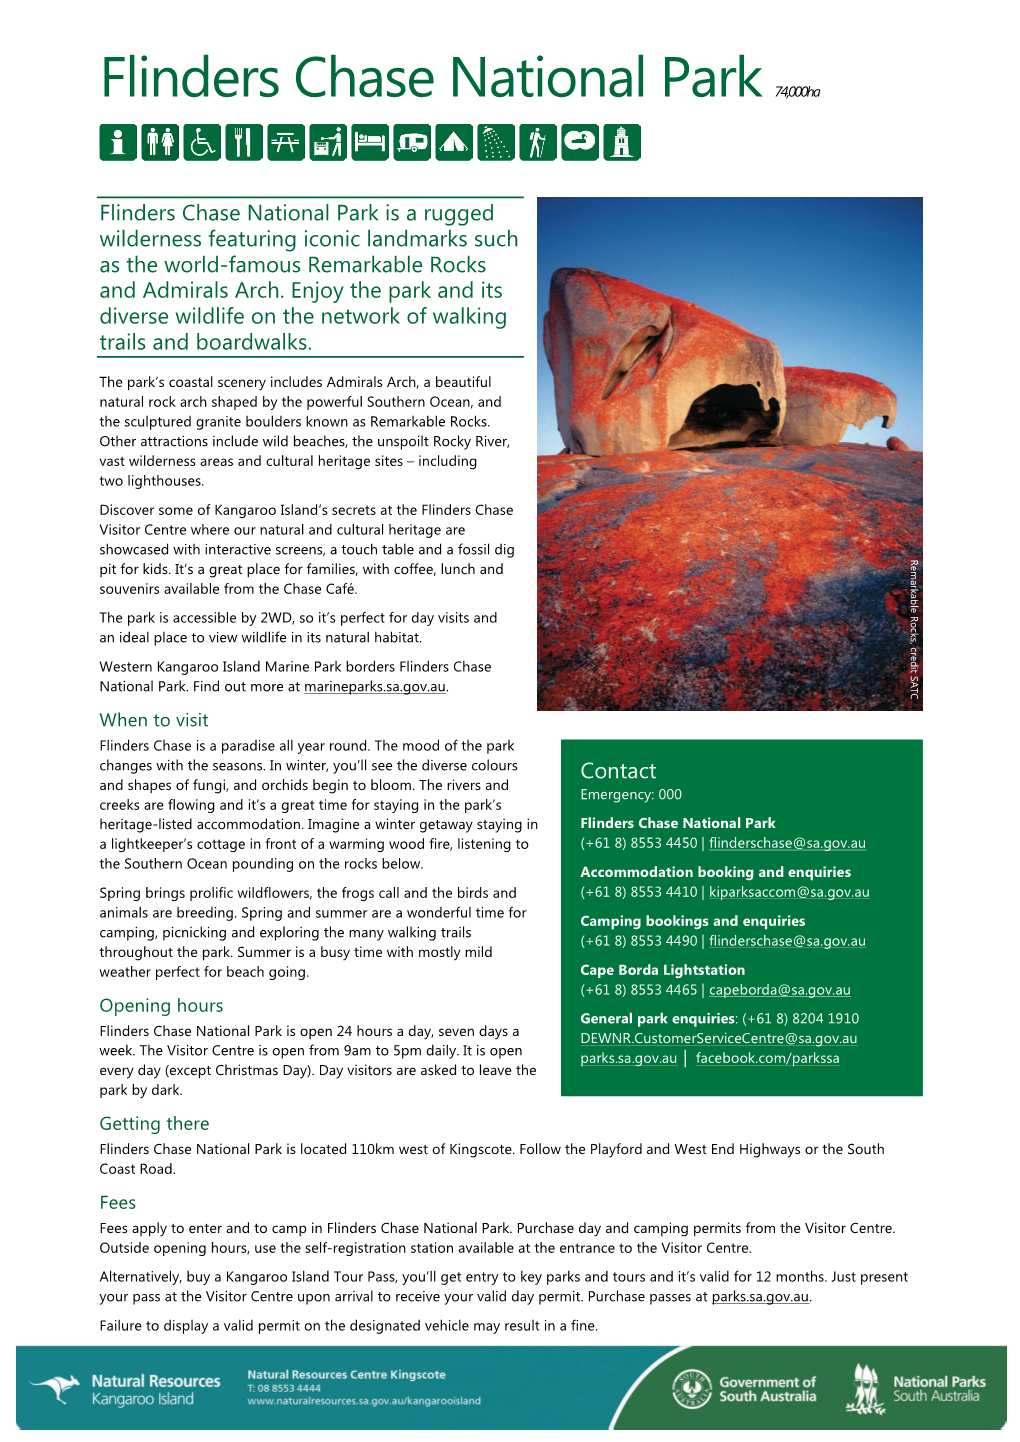 92670 Flinders Chase NP Parks Information Provision Project Factsheets/Maps.Indd 1 30/06/14 8:16 PM Flinders Chase National Park 74,000Ha